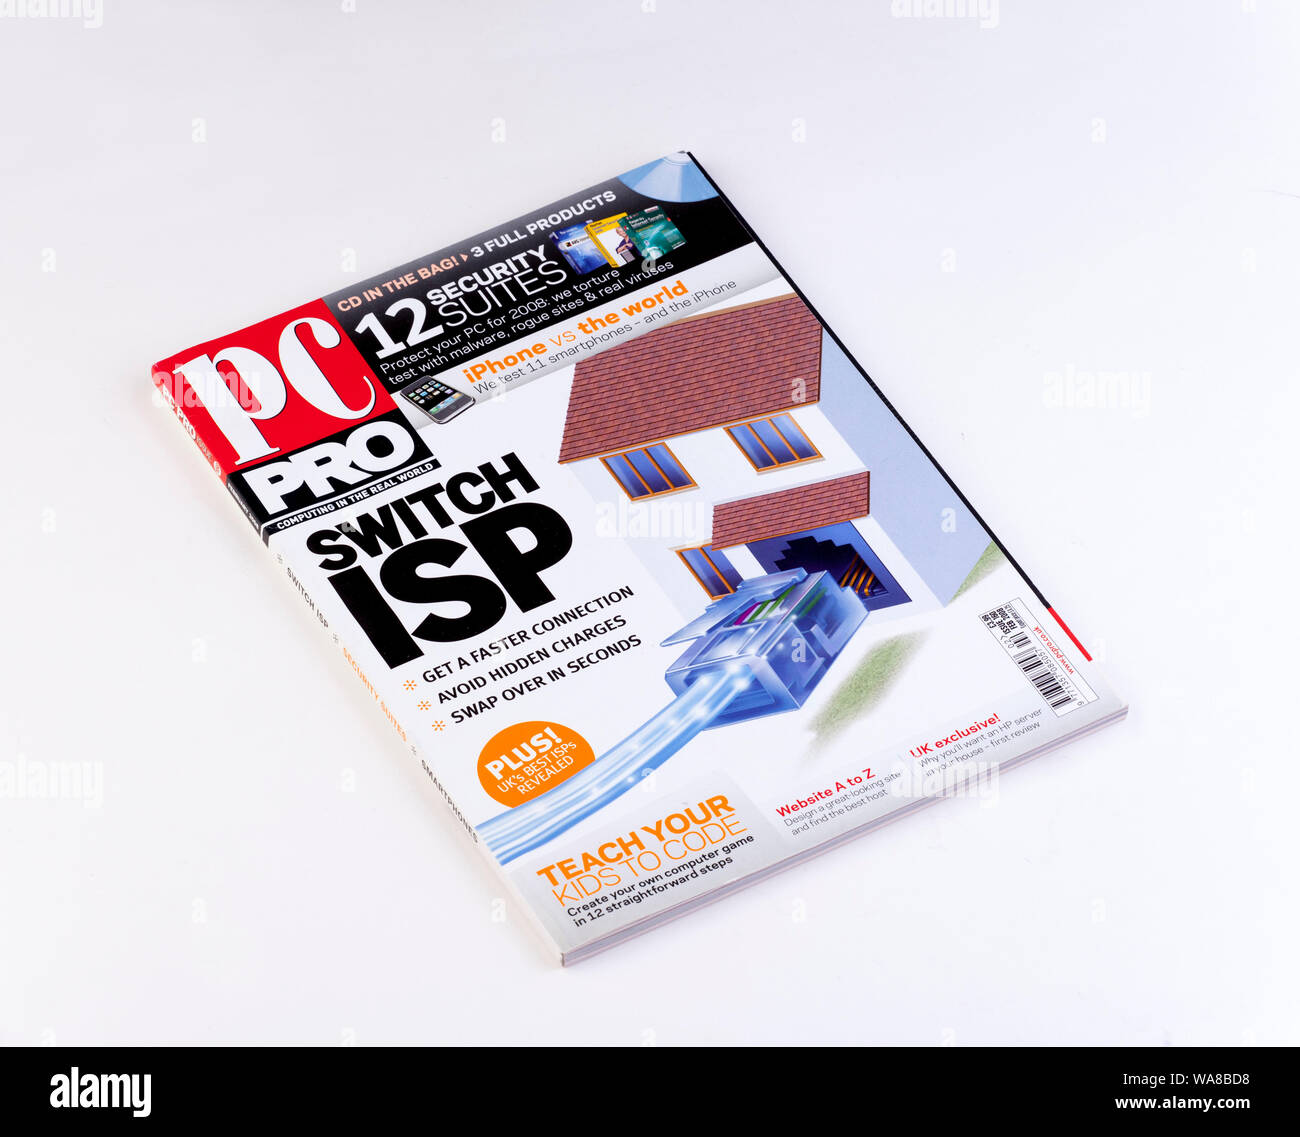 PC Pro computer magazine Foto Stock